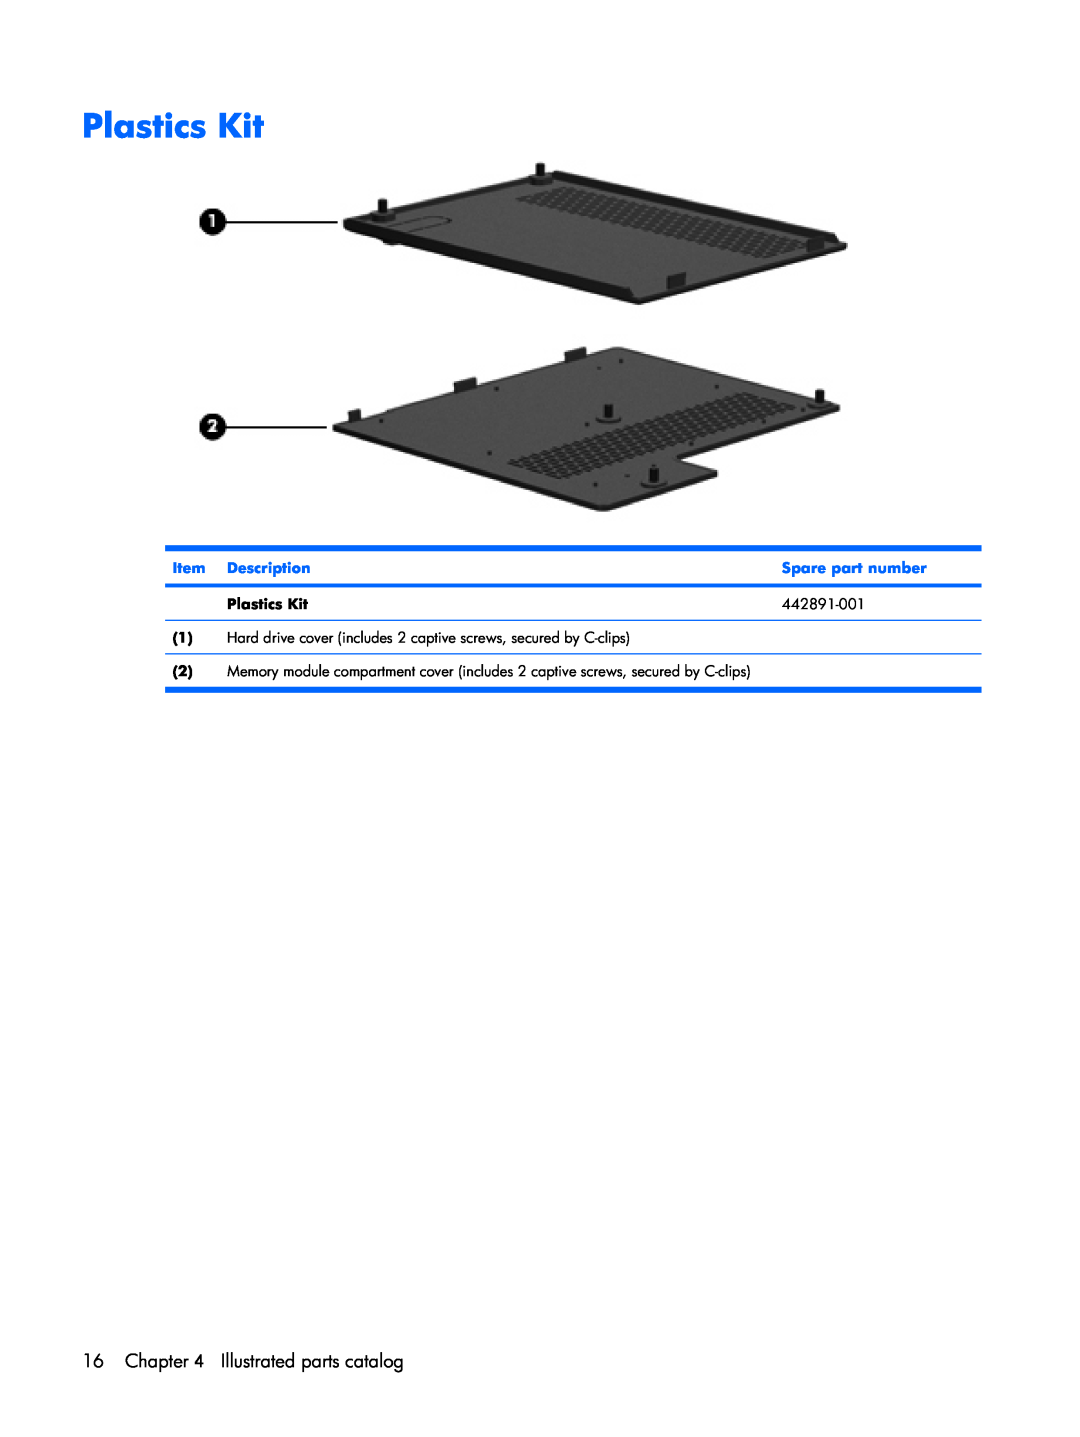 Compaq F500 manual Plastics Kit, Item Description, Spare part number, 442891-001 